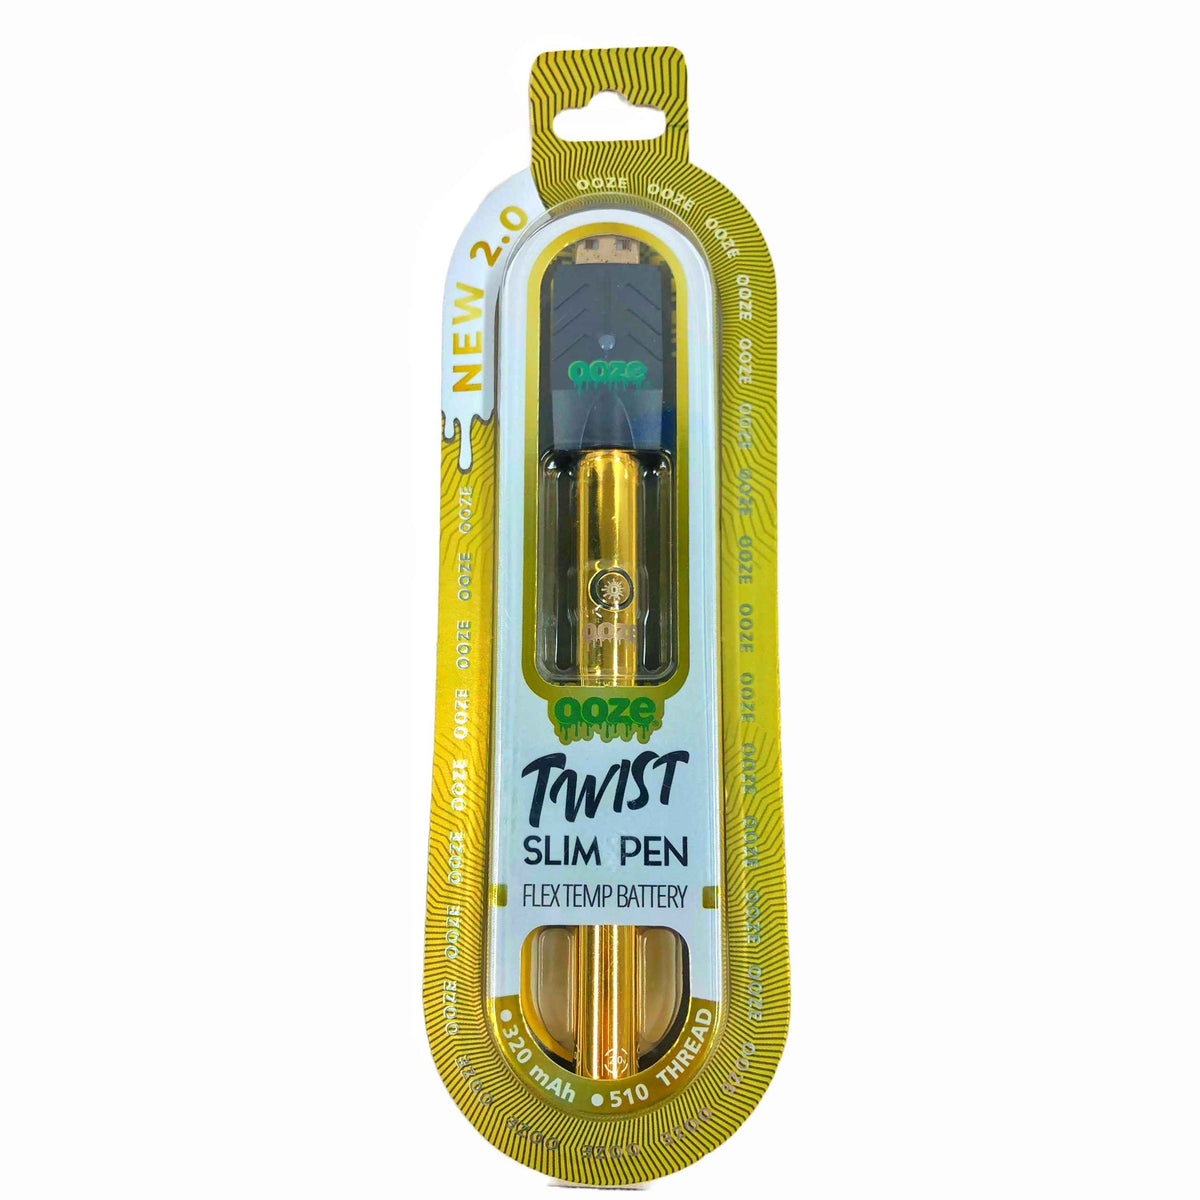 Ooze Twist Slim Pen Battery Lucky Gold Color